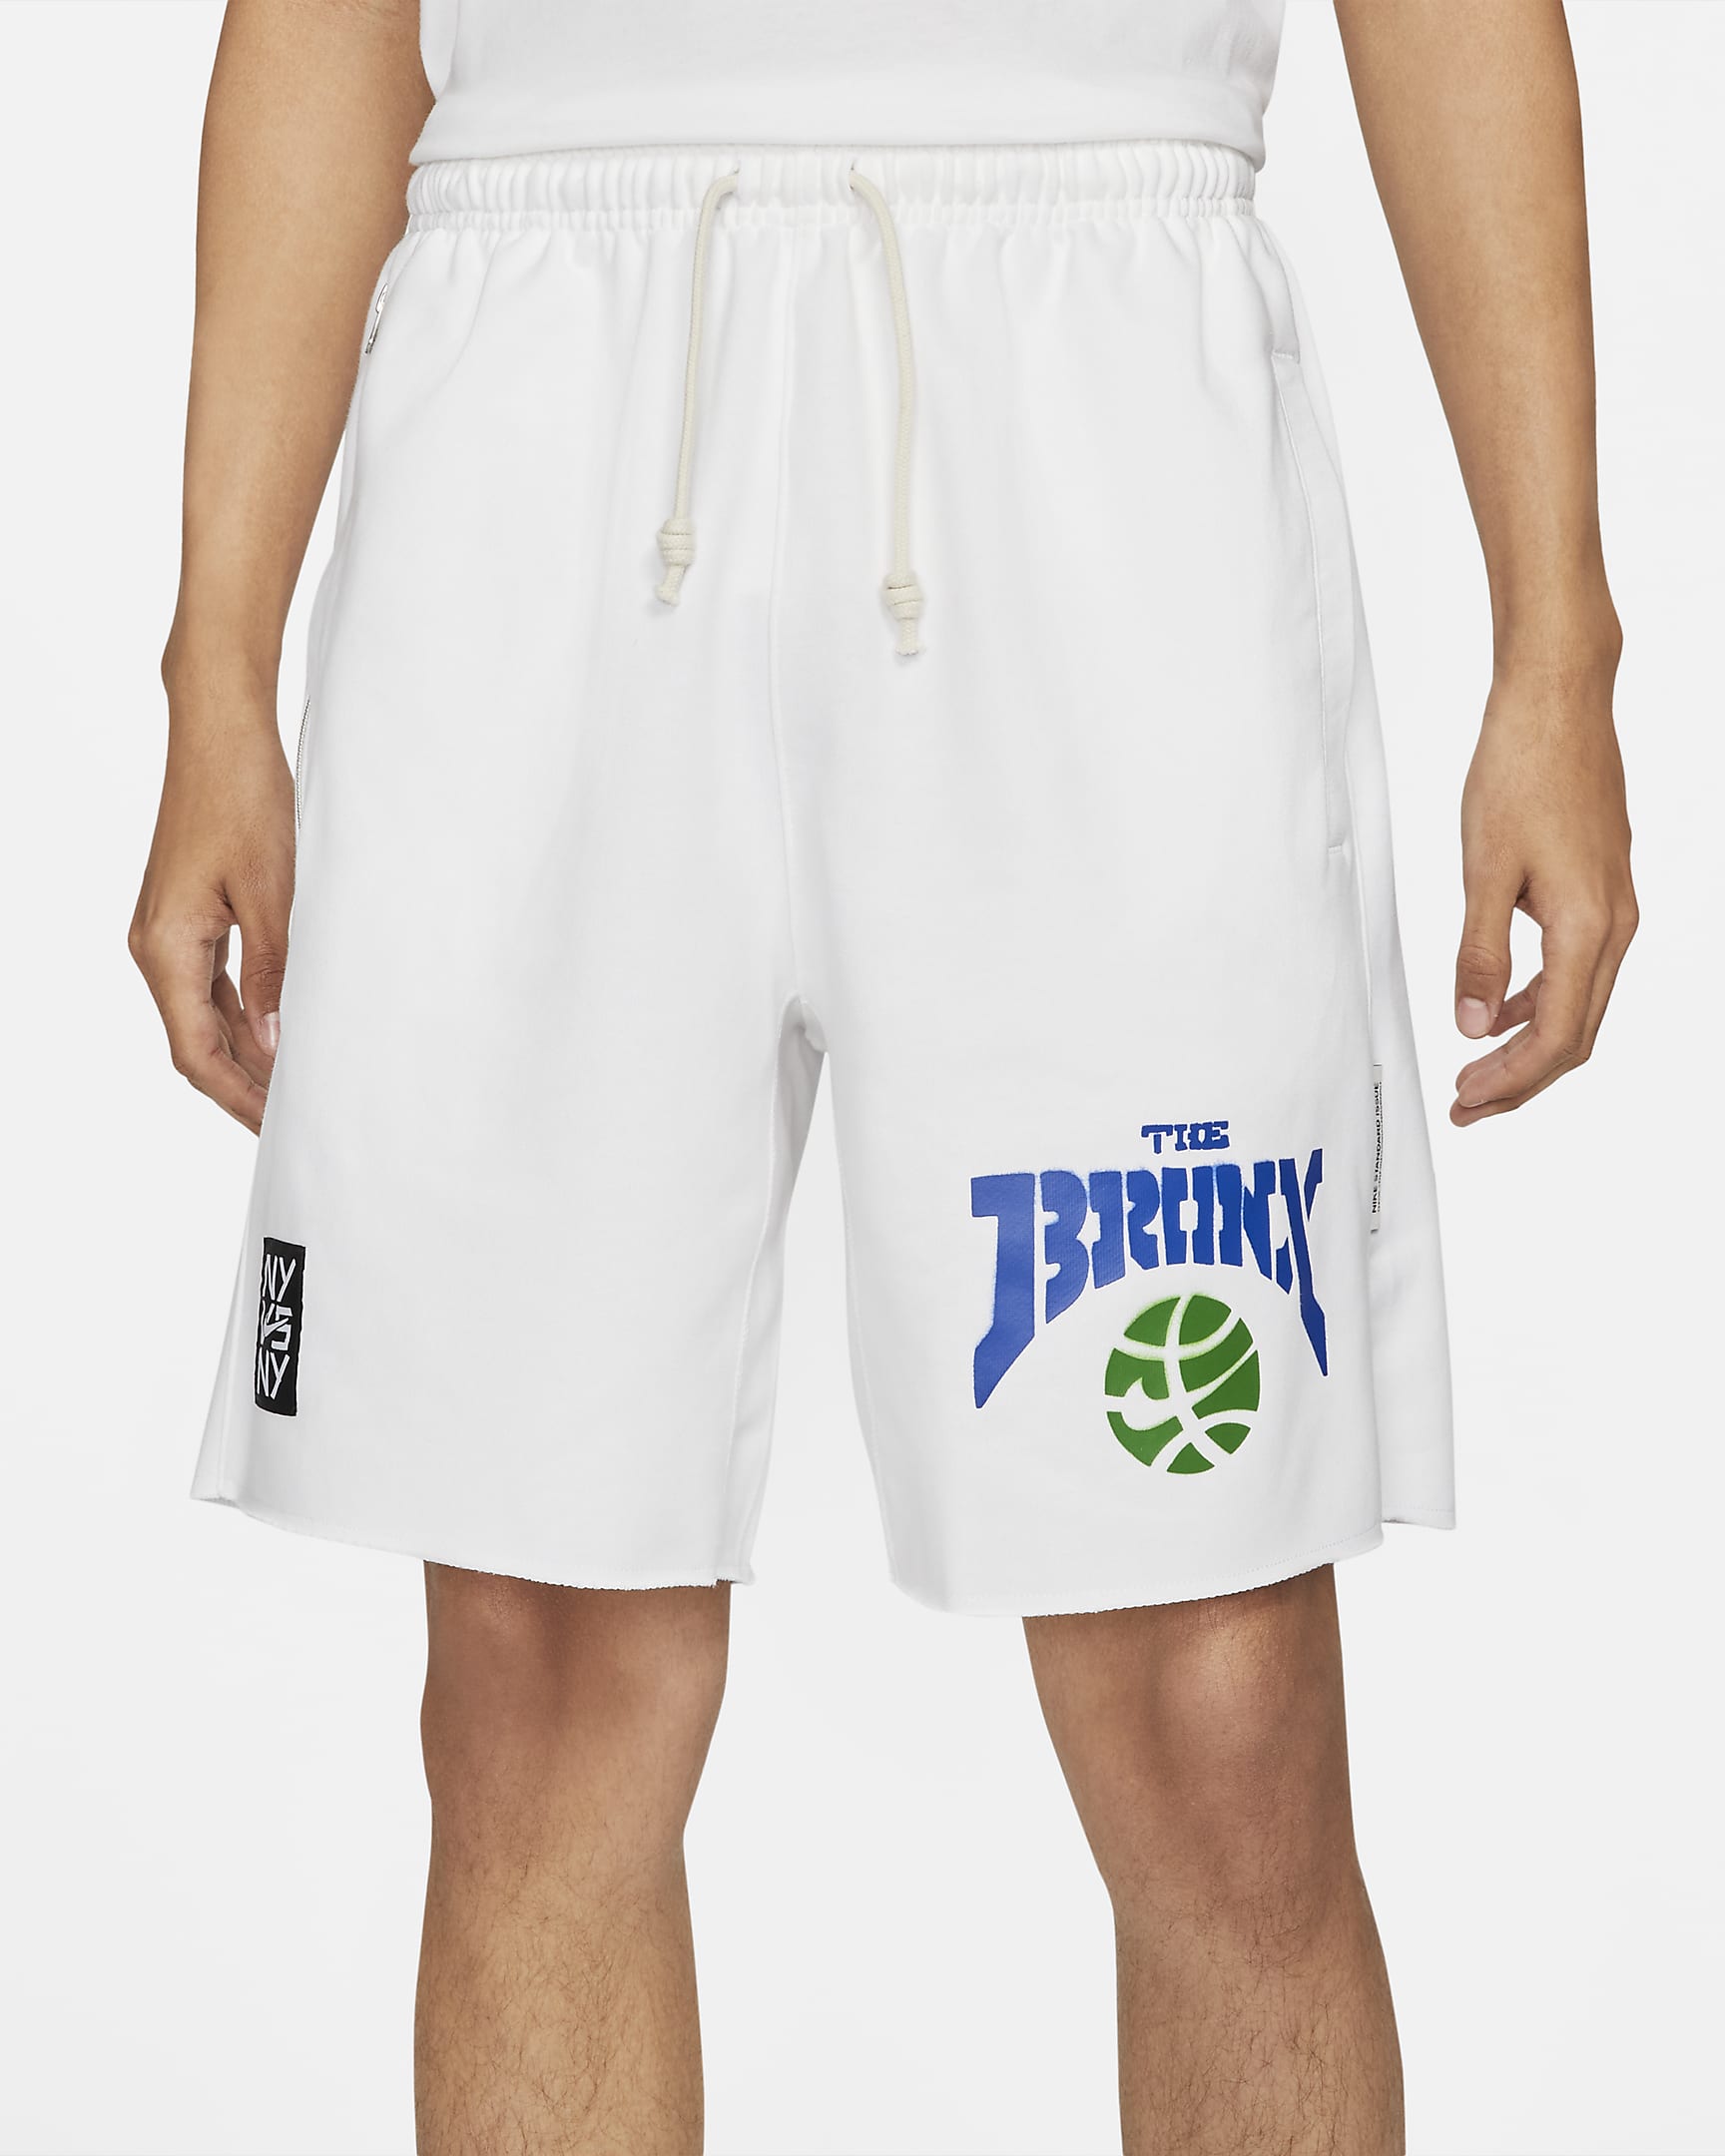 standard-issue-watson-mens-basketball-fleece-shorts-6C2R8v.png